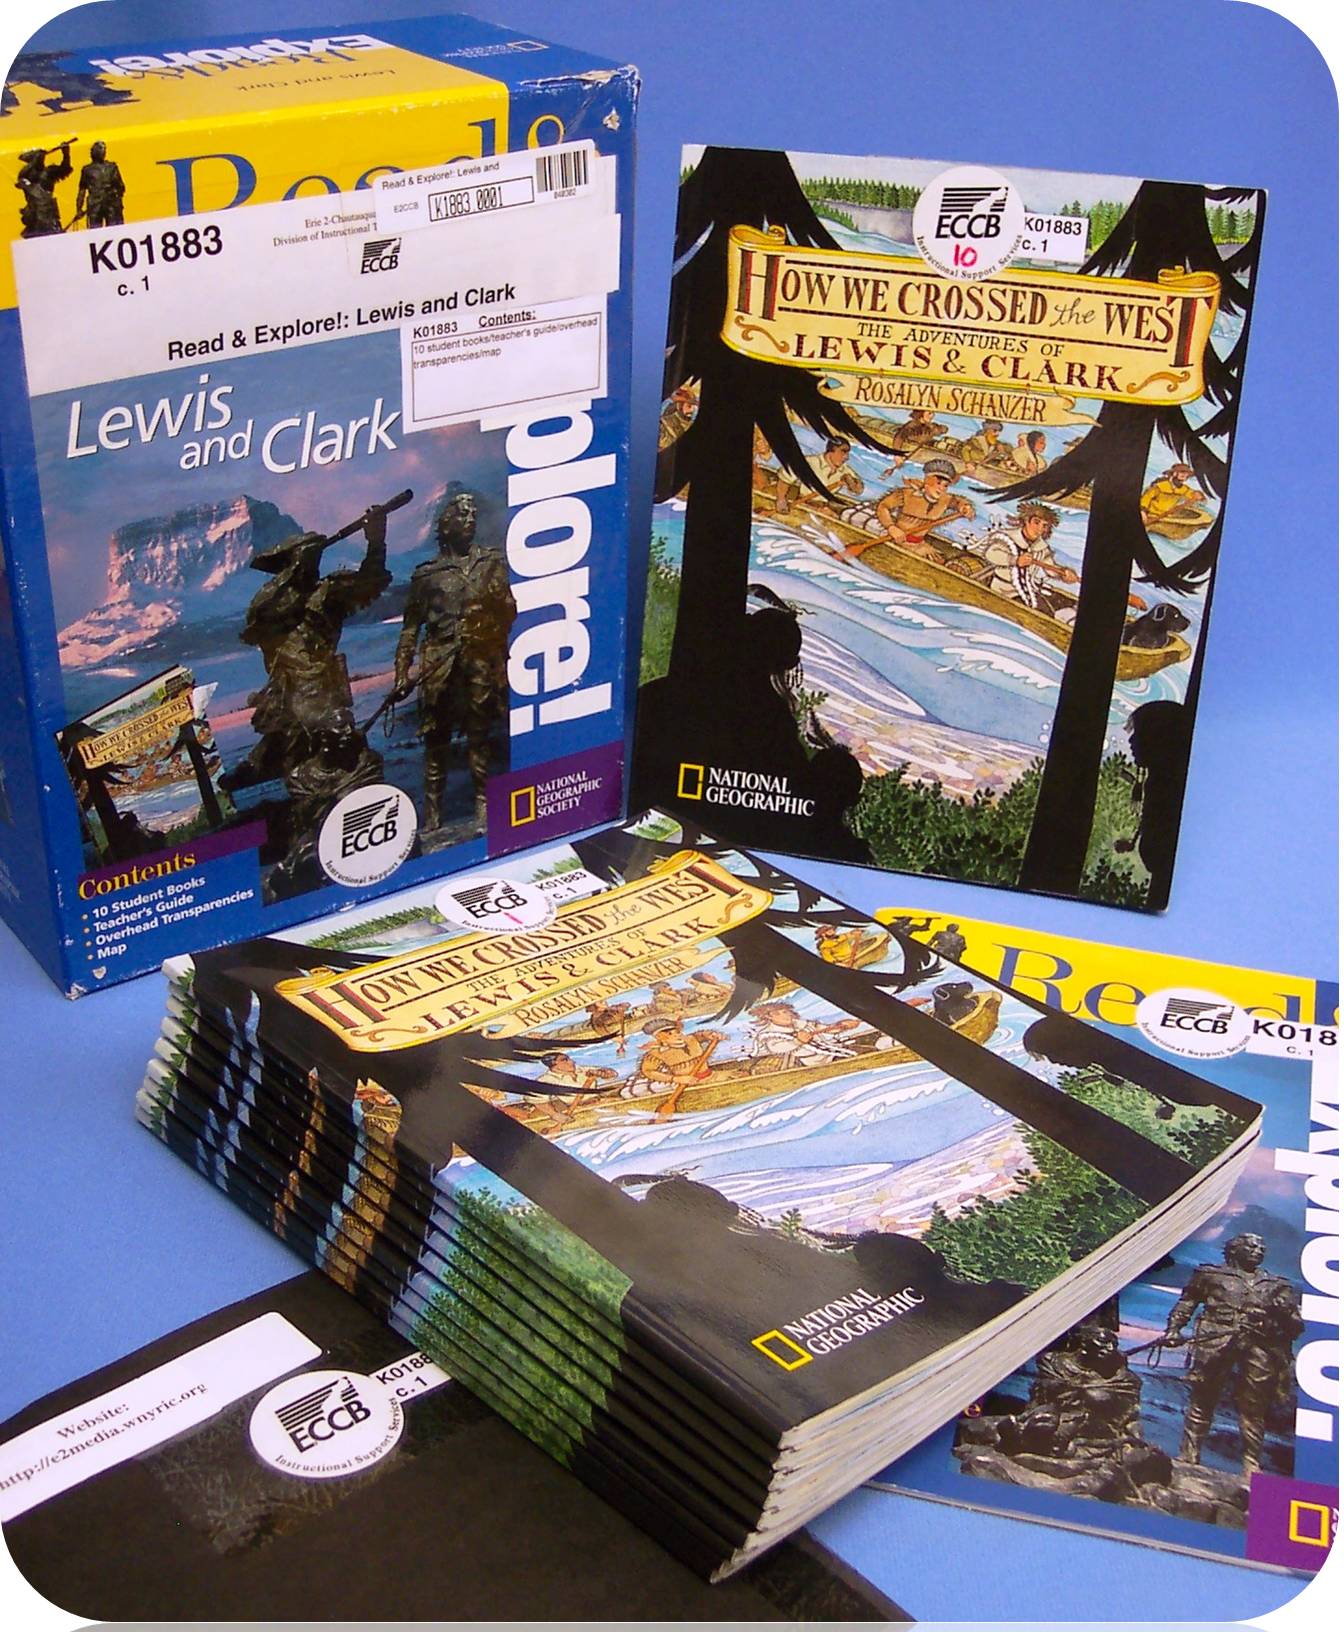 Read & Explore!: Lewis and Clark